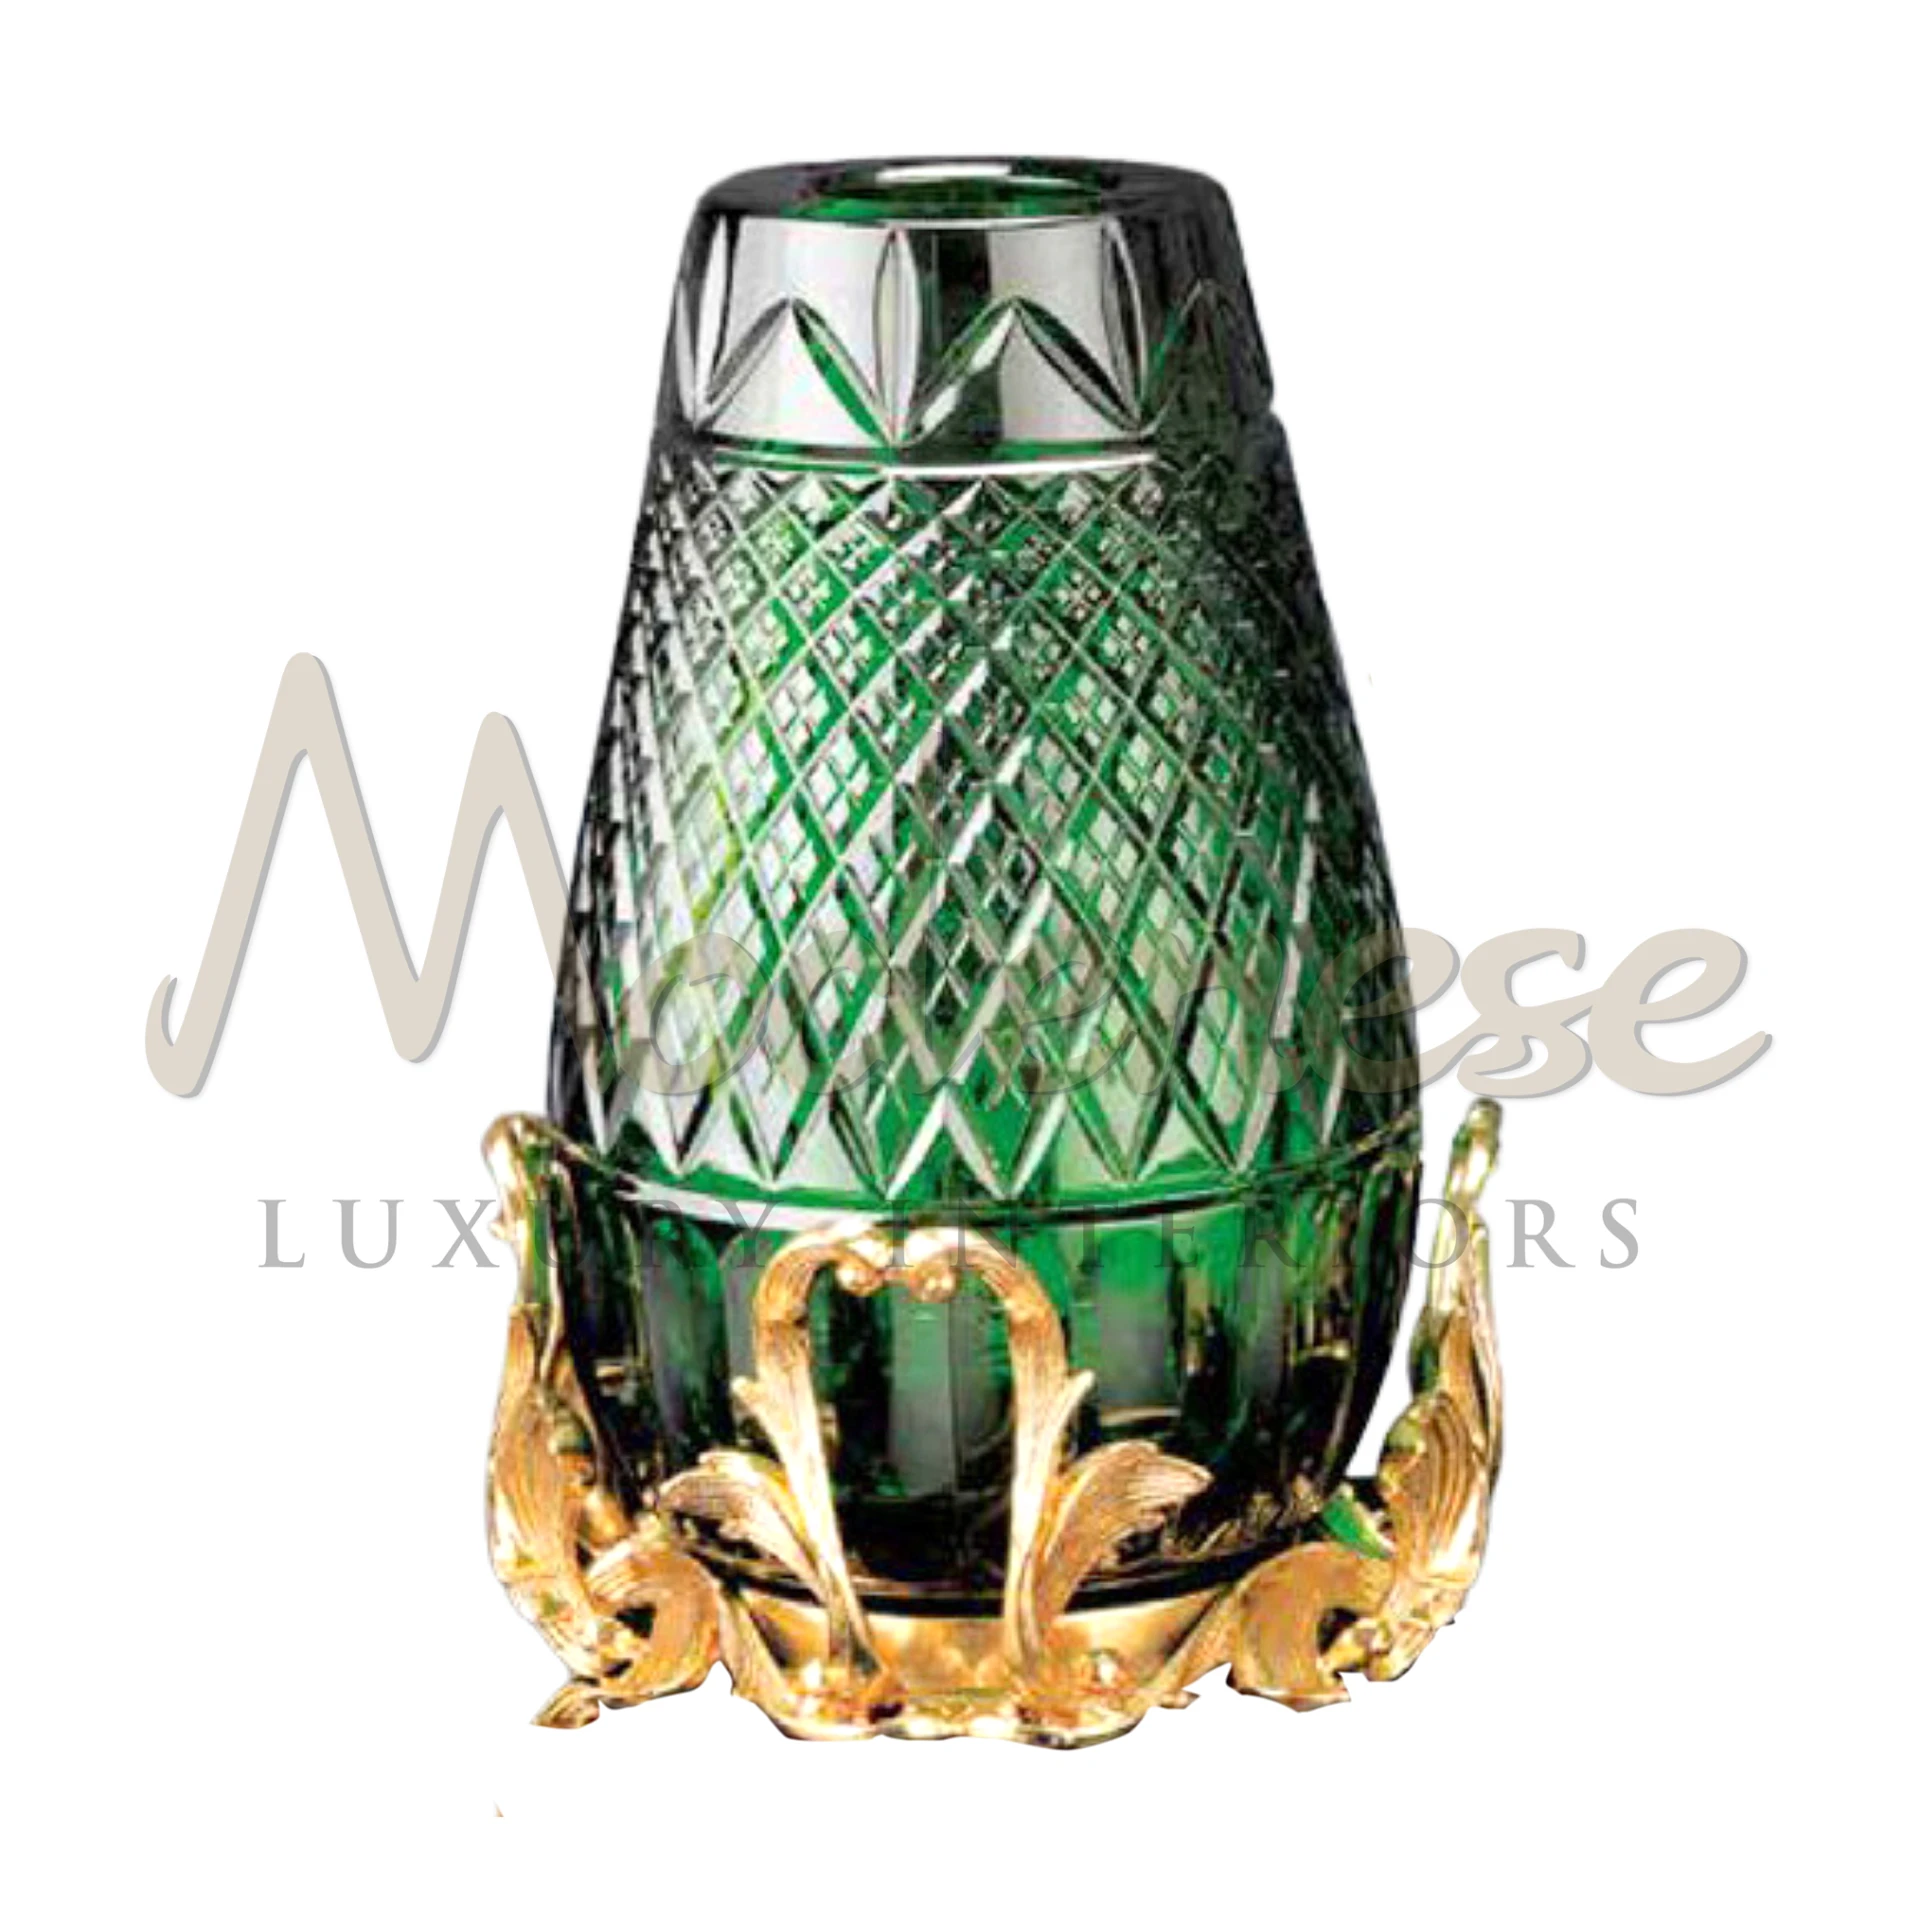 Royal Luxury Green Vase - Elegant decorative item for sophisticated home decor.